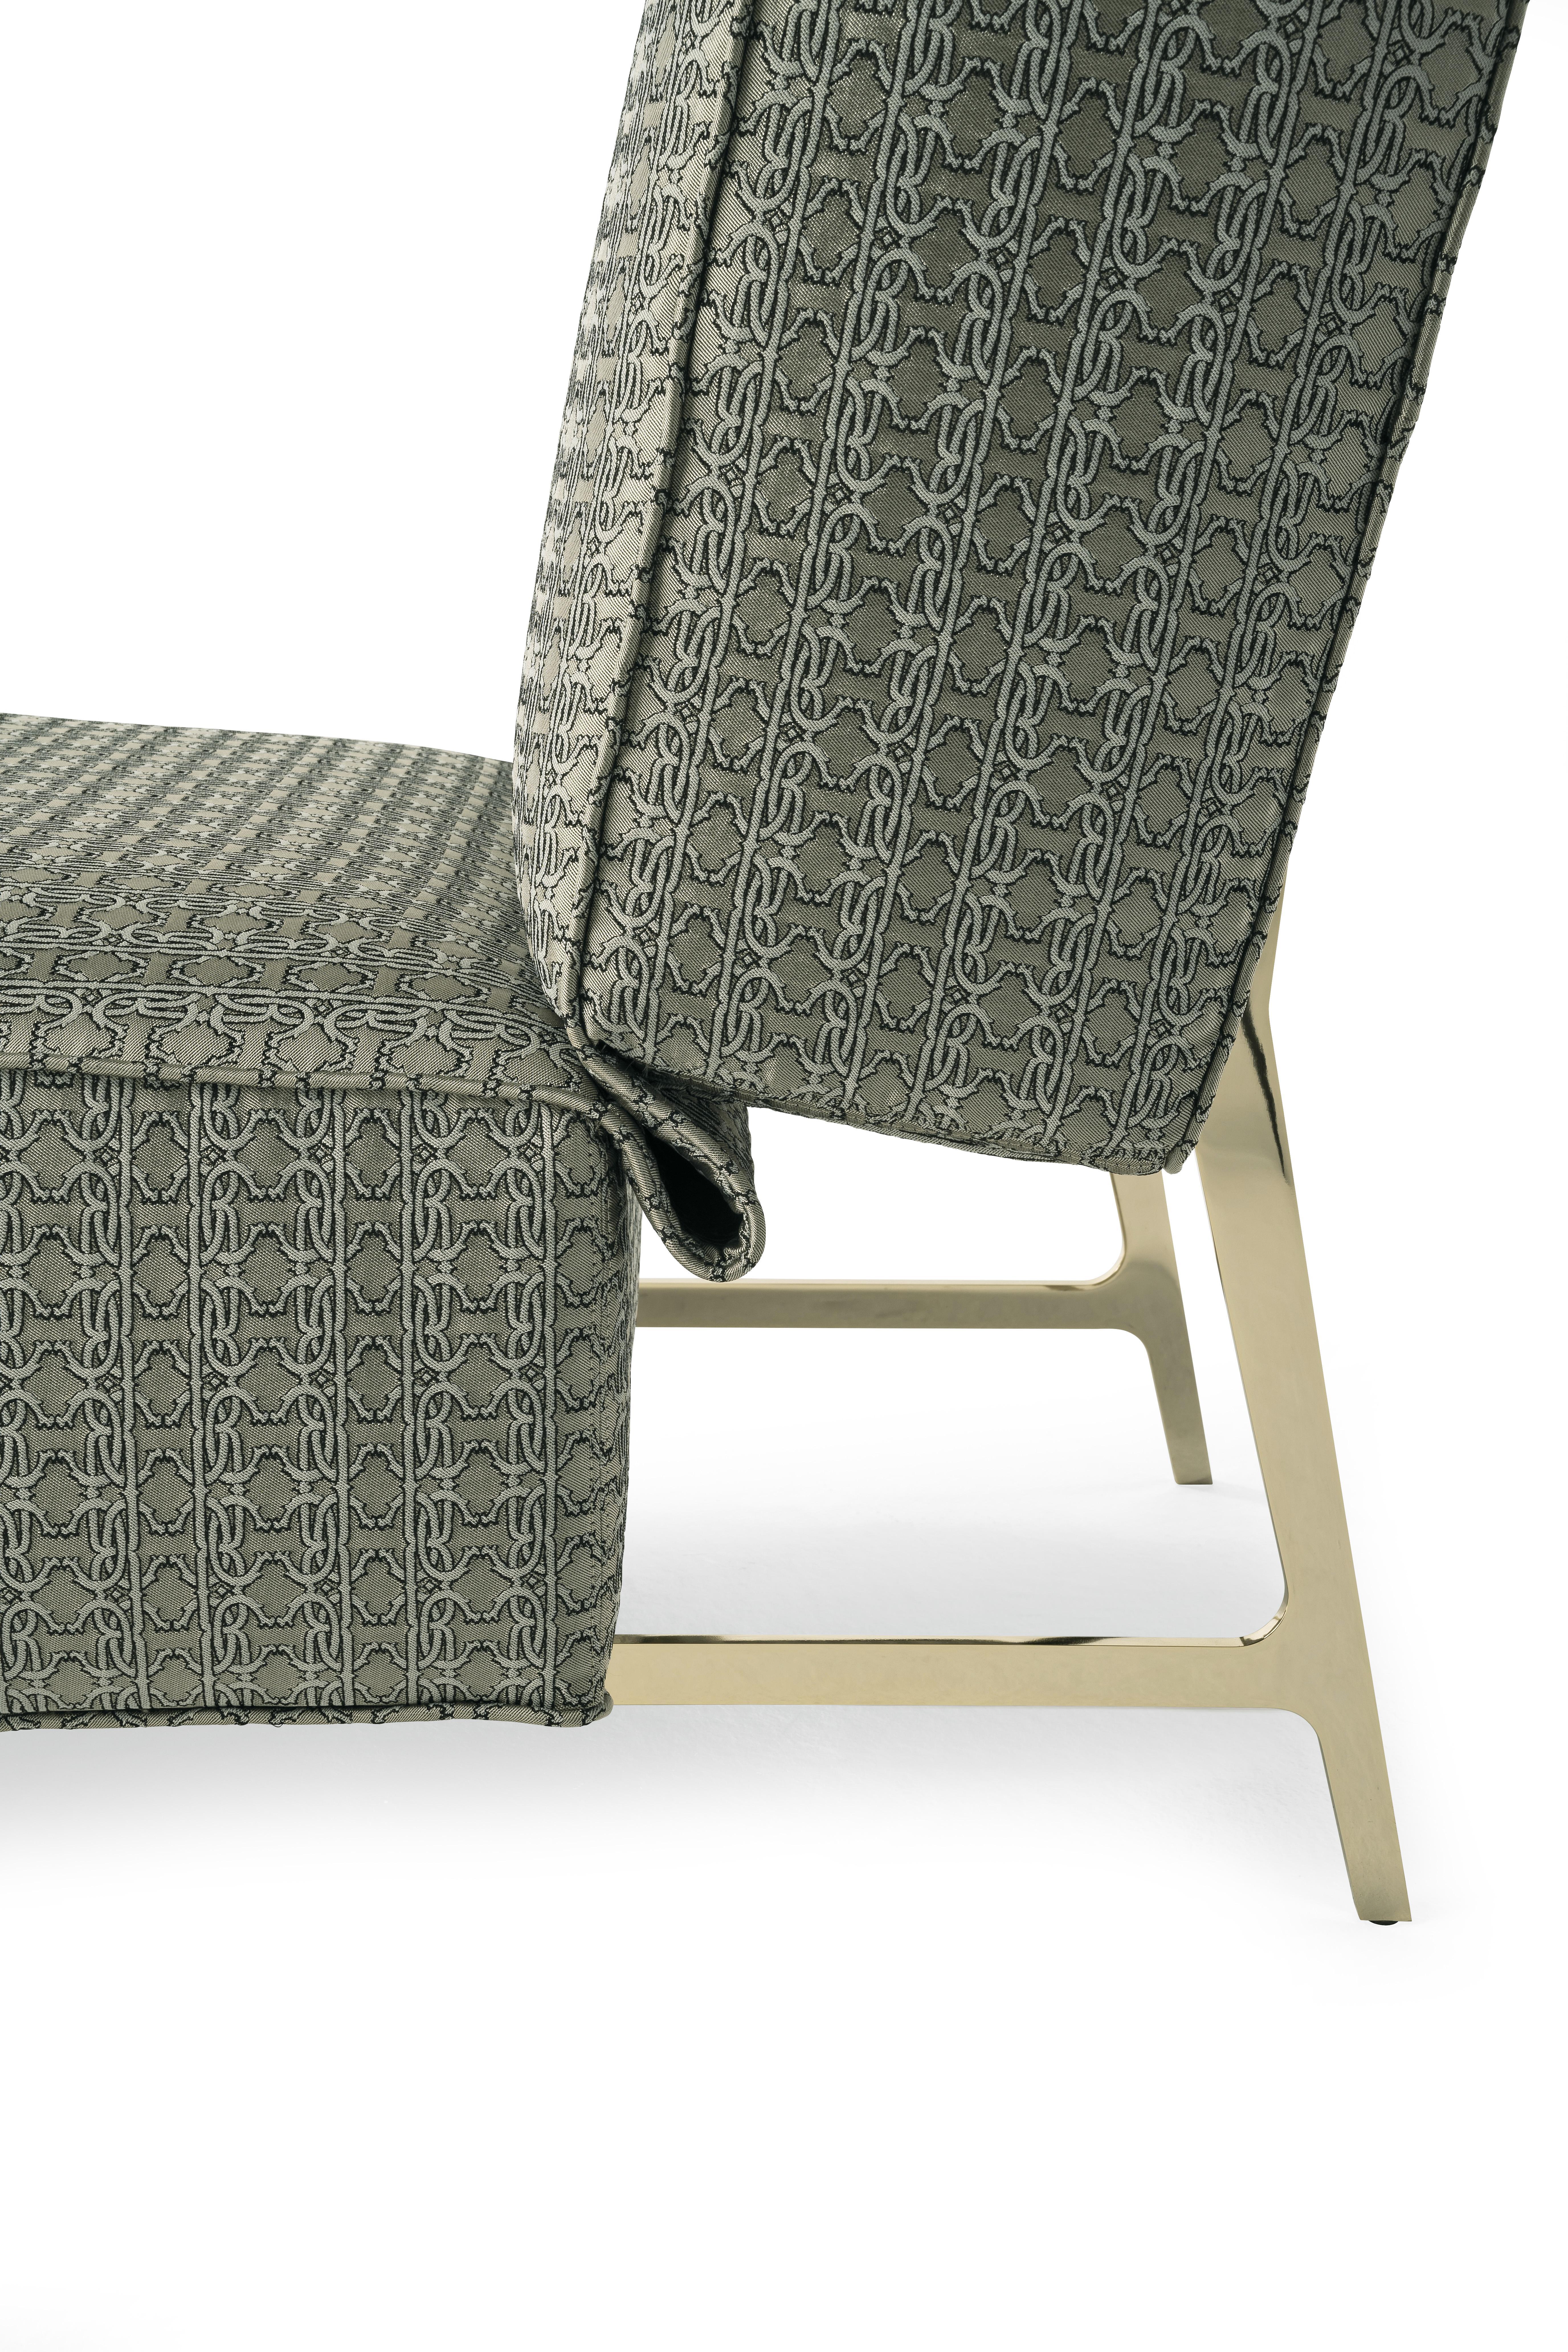 Contemporary 21st Century Davis Armchair in Monogram Fabric by Roberto Cavalli Home Interiors For Sale